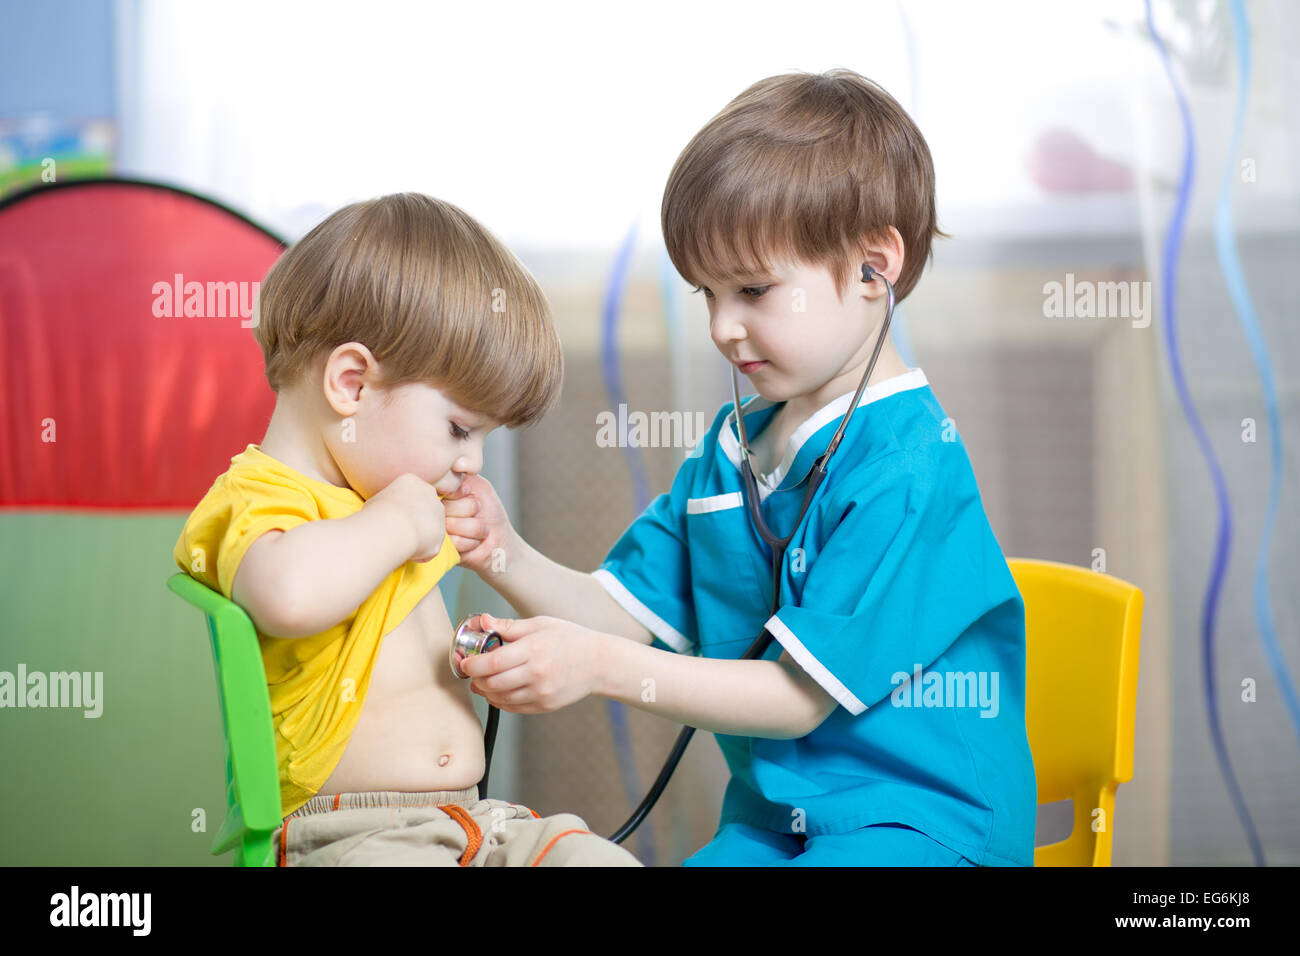 children boys play doctor Stock Photo